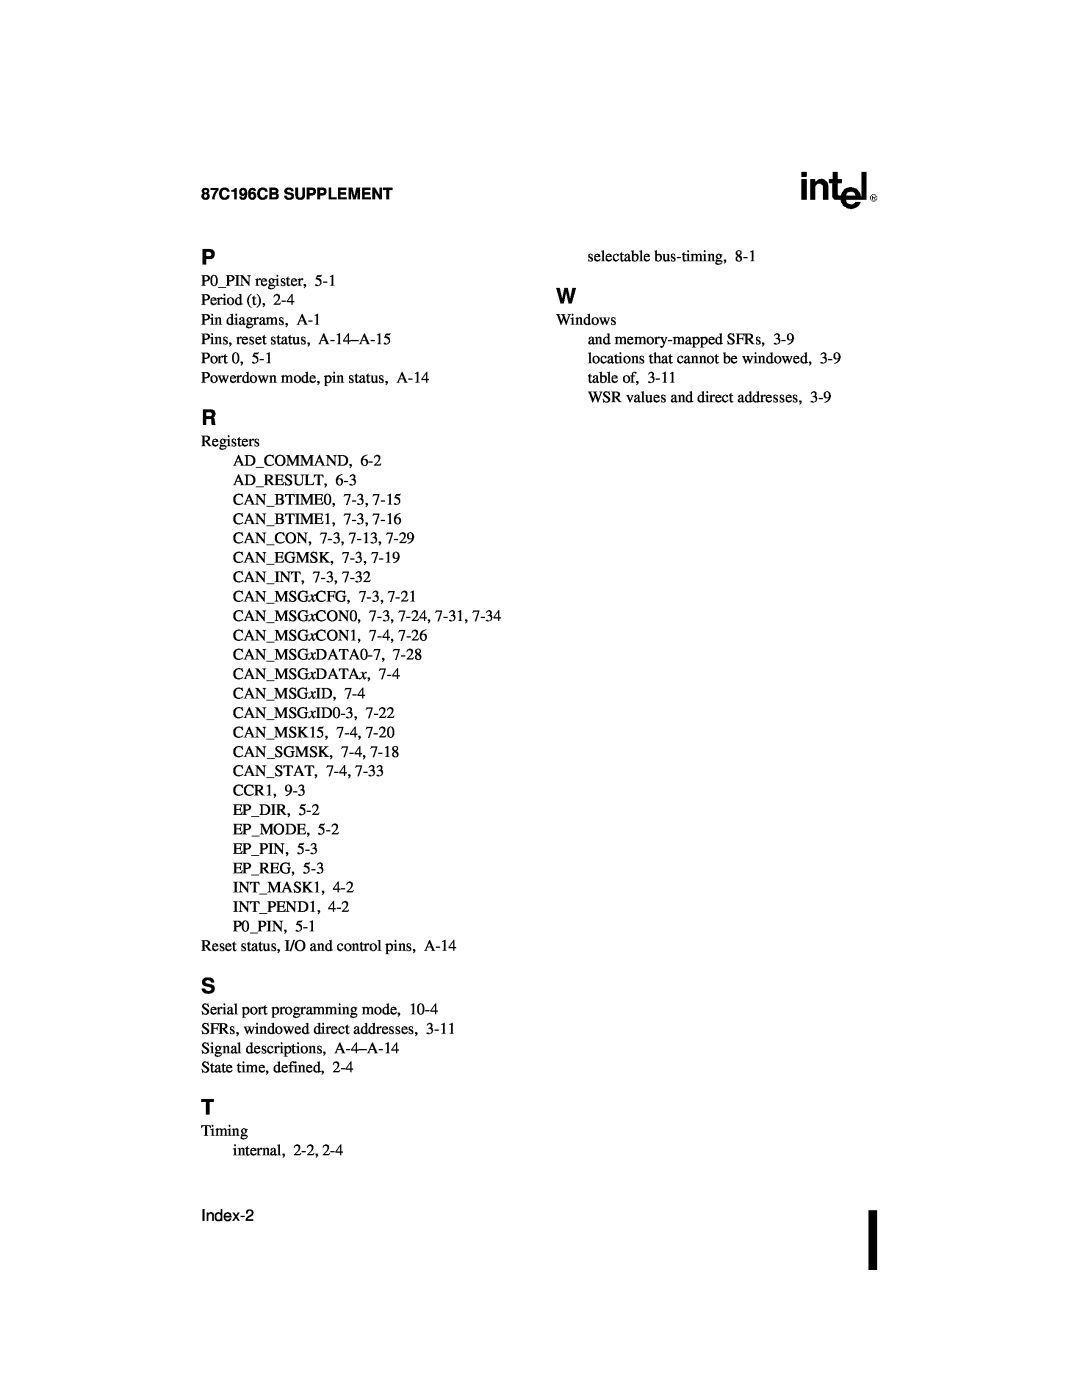 Intel 8XC196NT user manual 87C196CB SUPPLEMENT, Index-2 